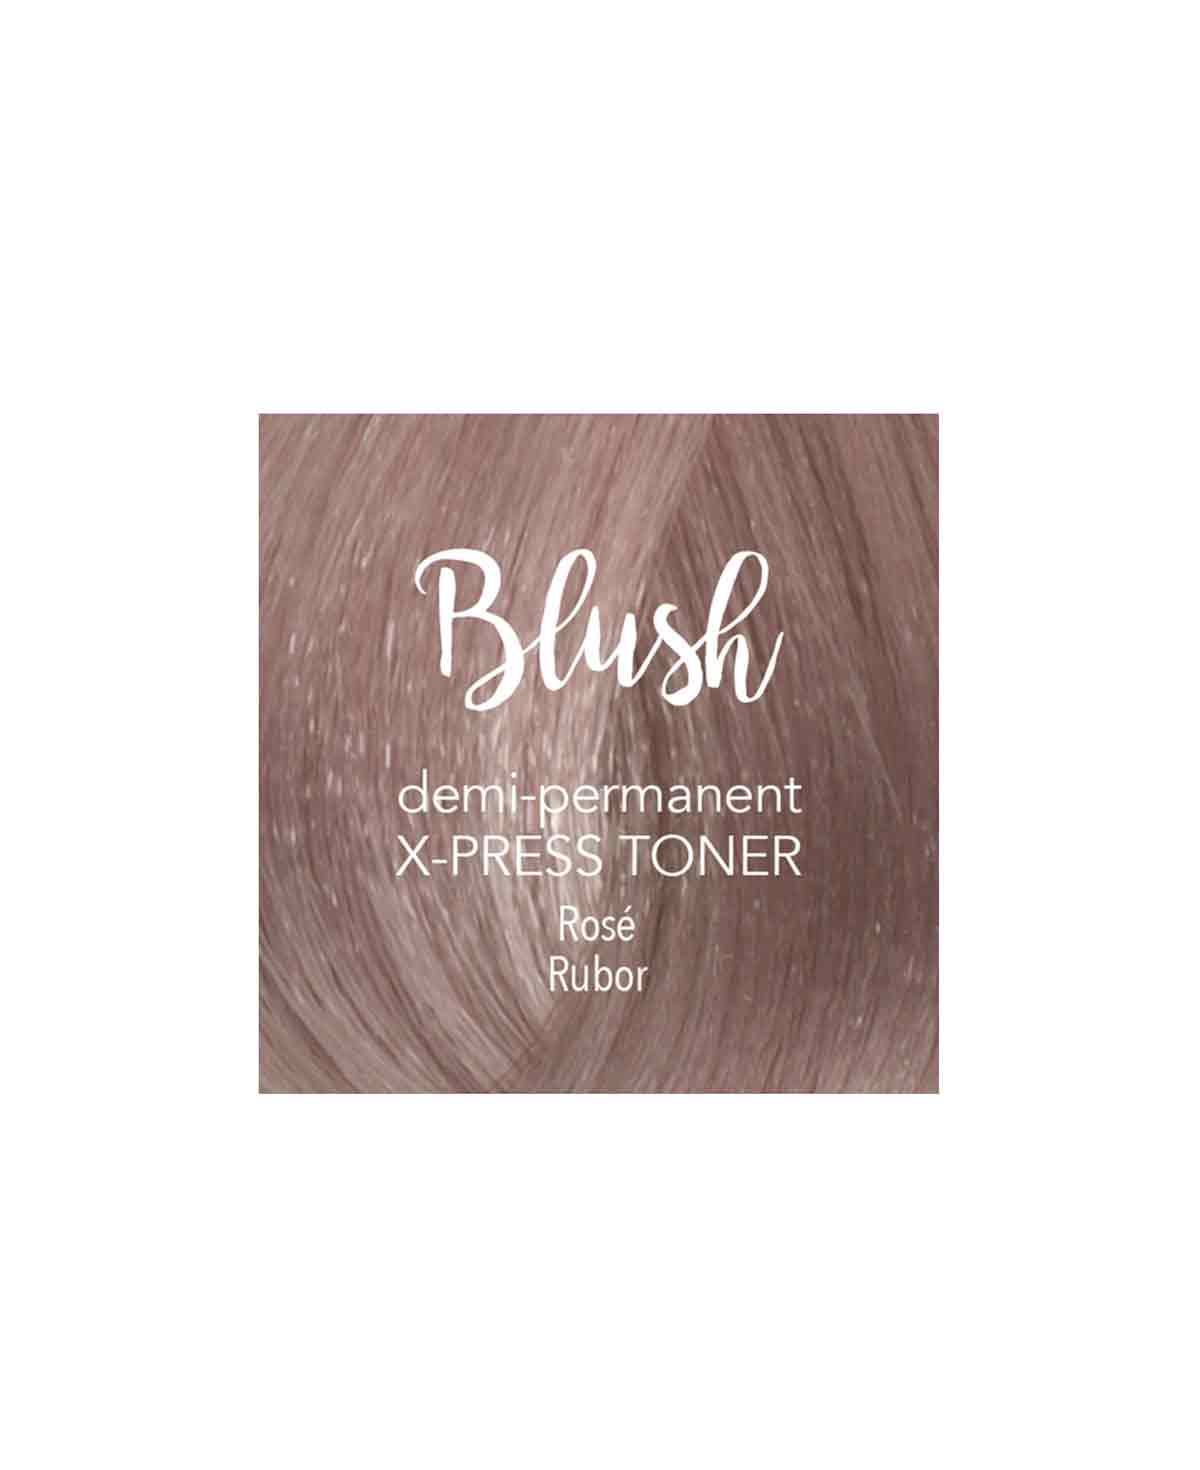 Mydentity - X-Press Toner Blush